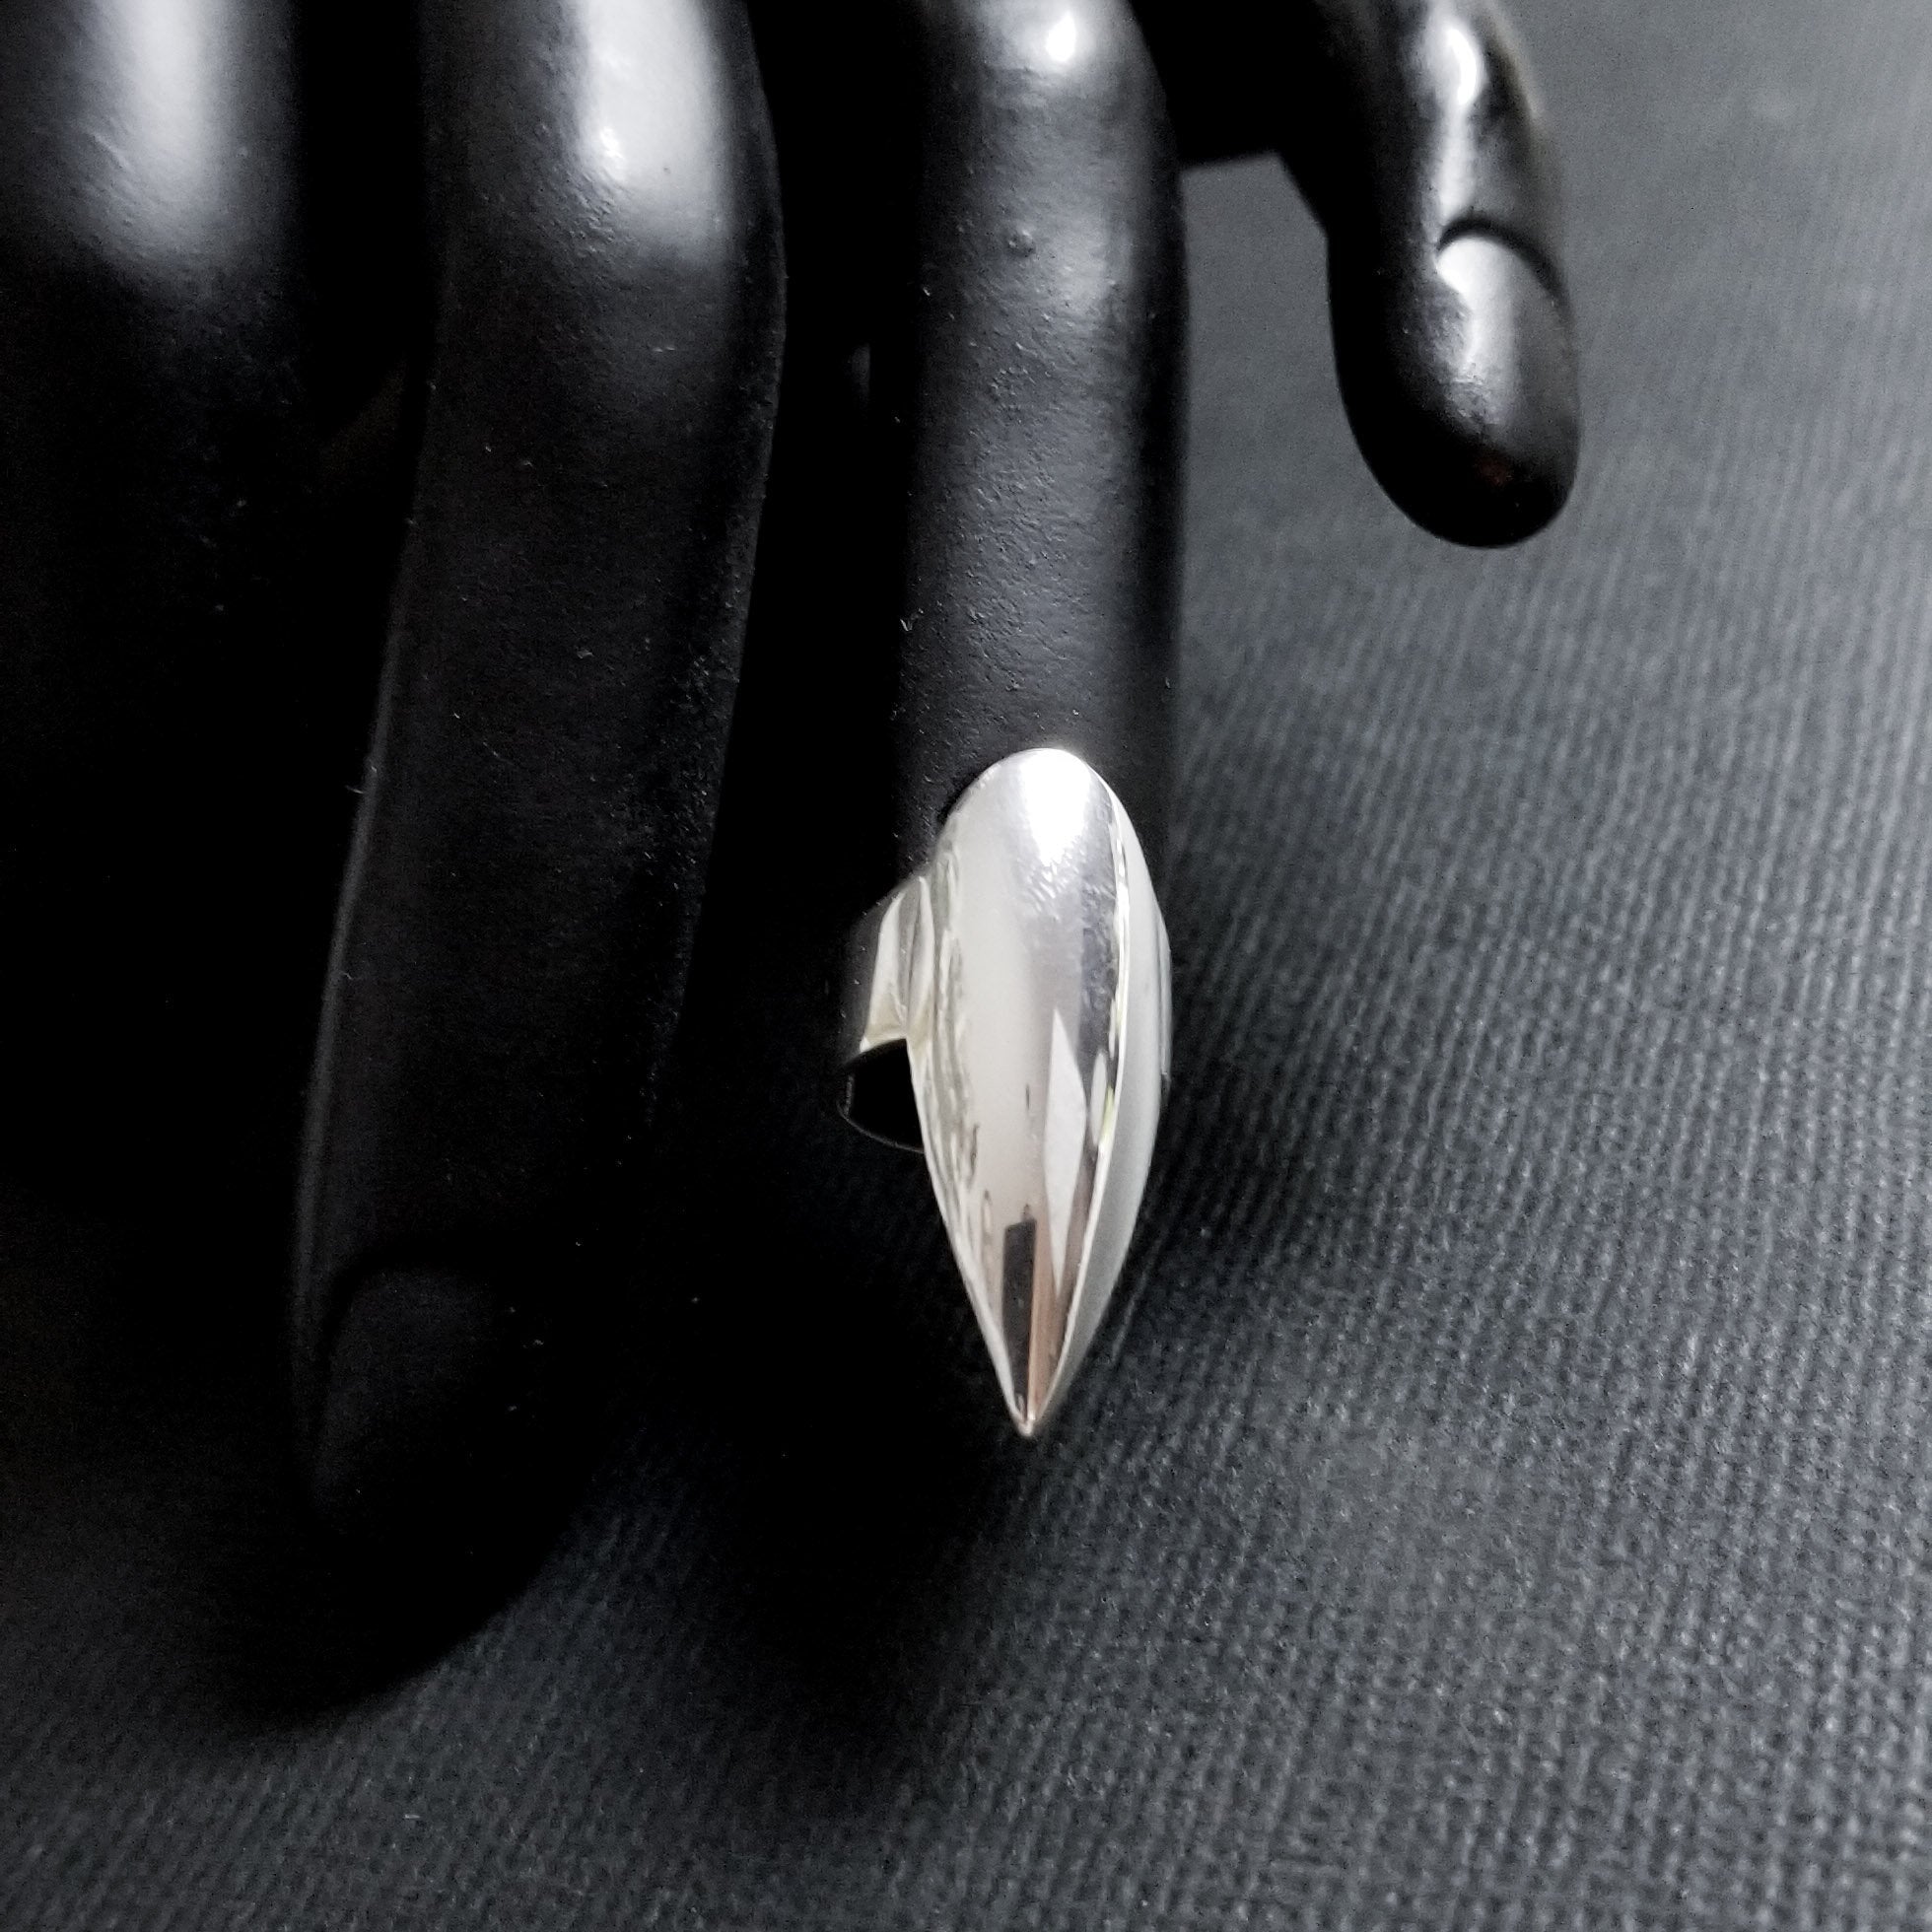 Skull Stiletto Midi Fake Nail Ring — Inchoo Bijoux